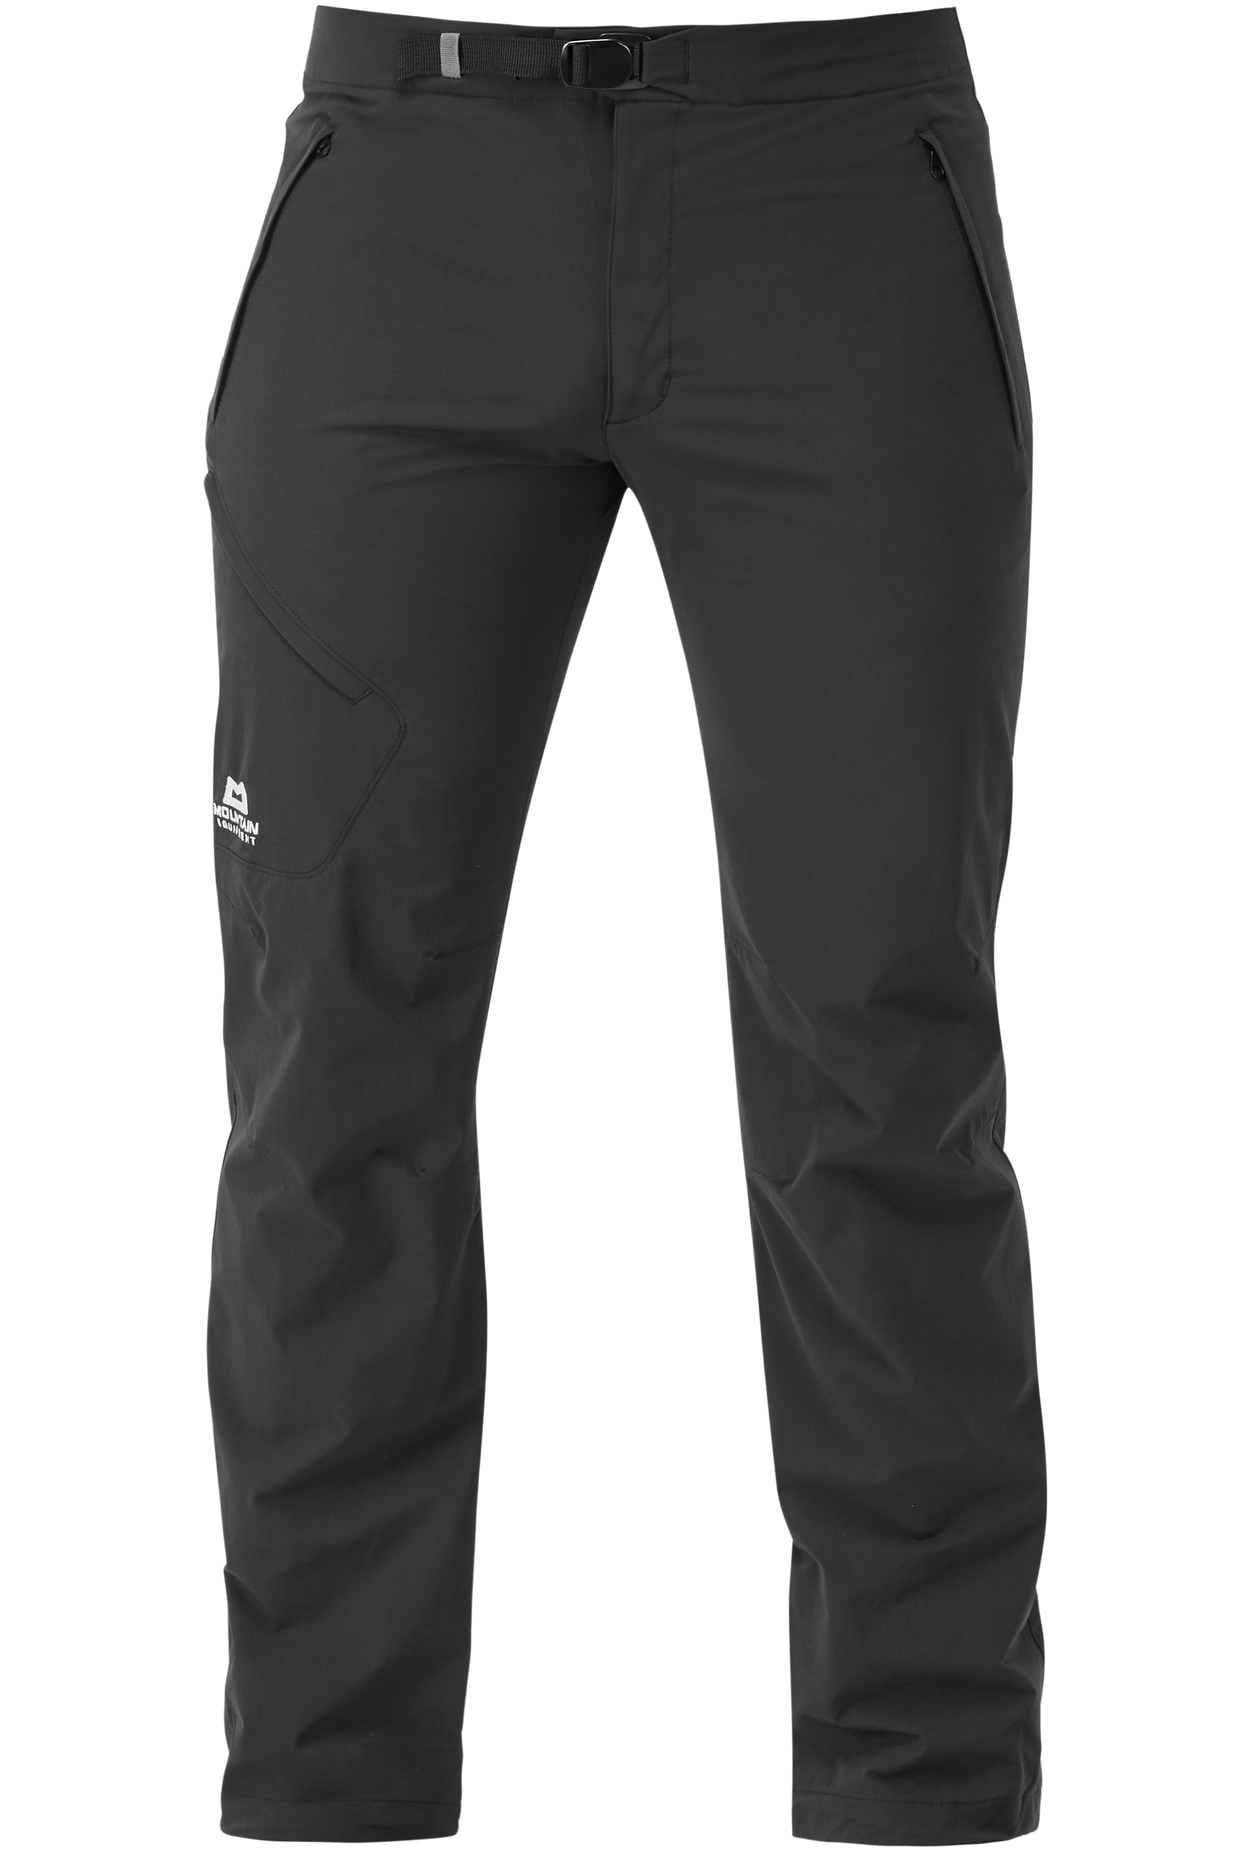 Mountain Equipment pánské softshellové kalhoty Comici Pant - zkrácené Barva: black/black, Velikost: 38/XXL